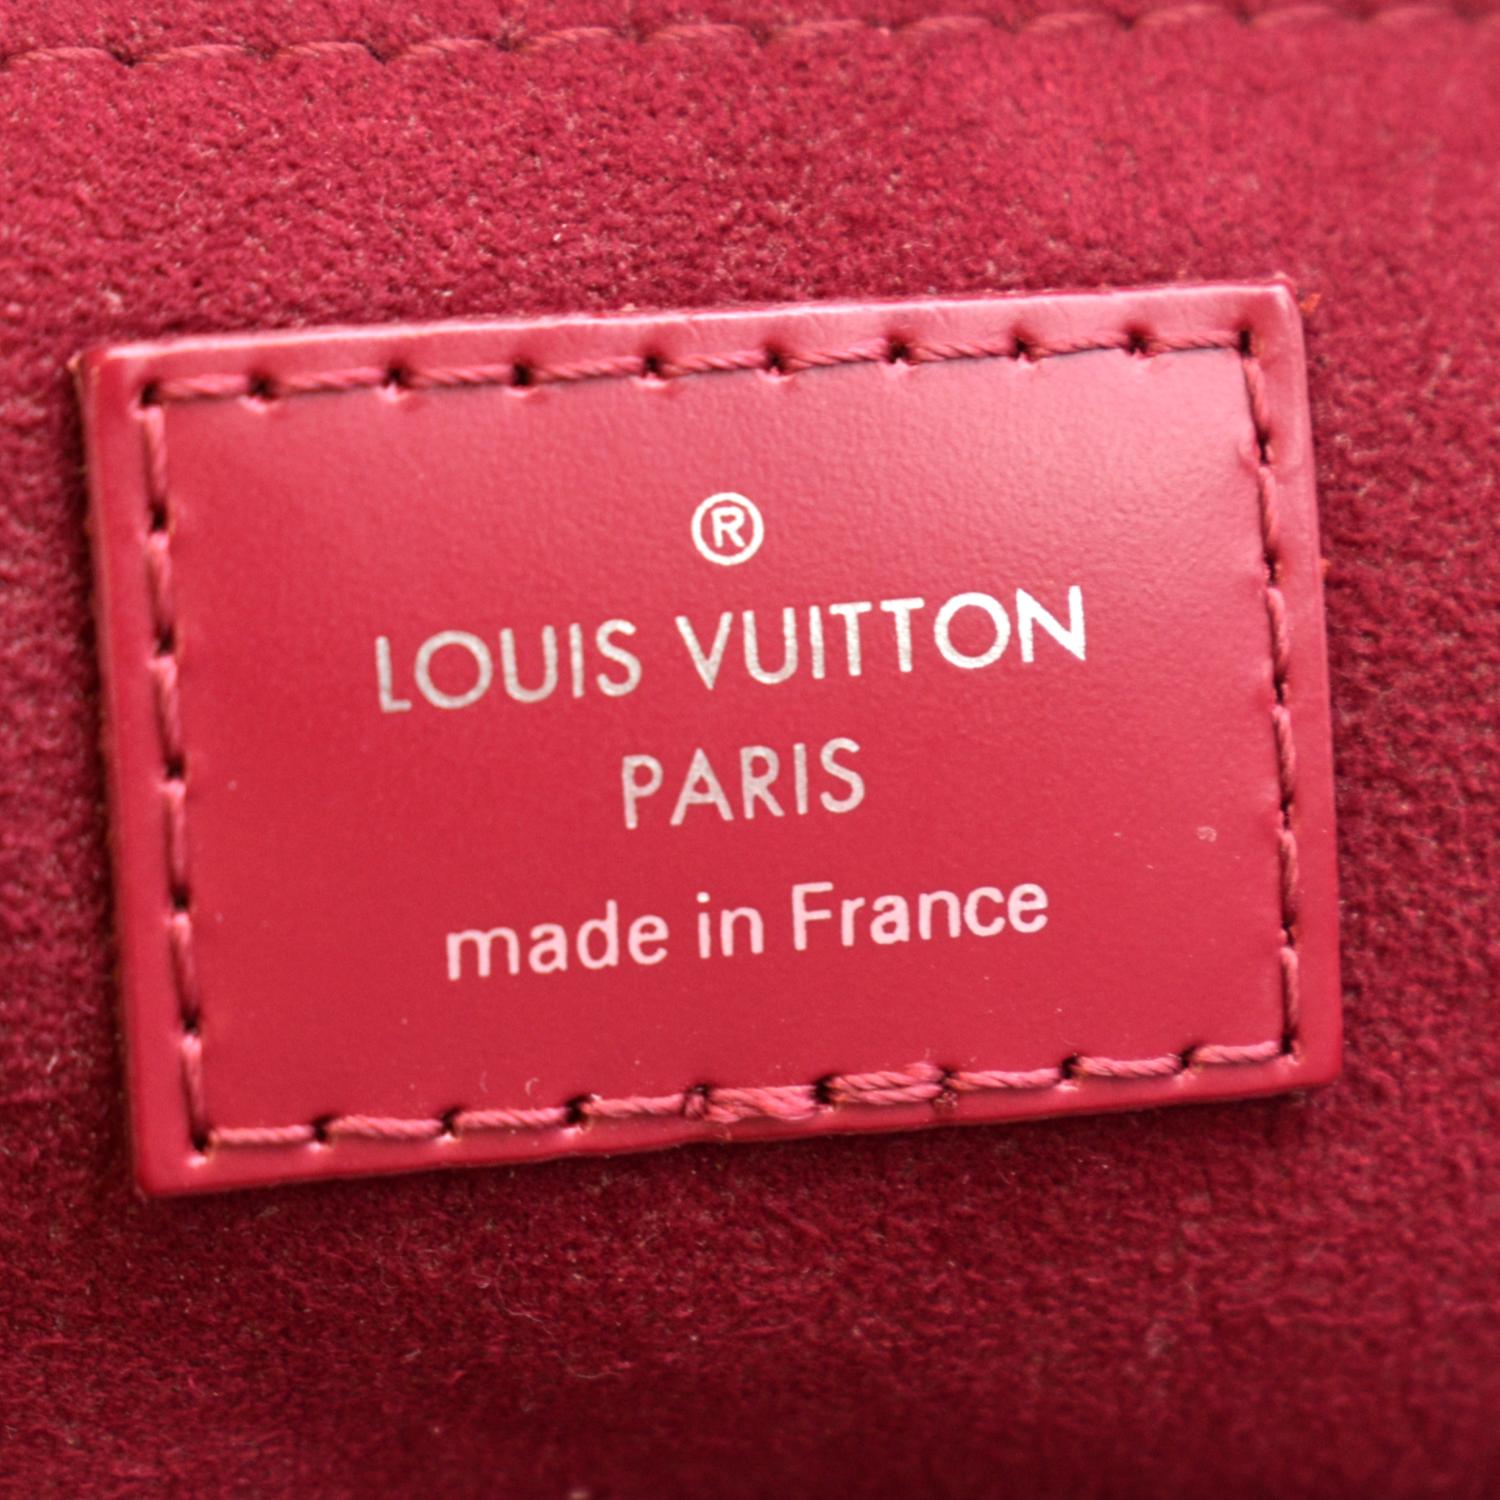 Black Louis Vuitton Epi Marly MM Satchel